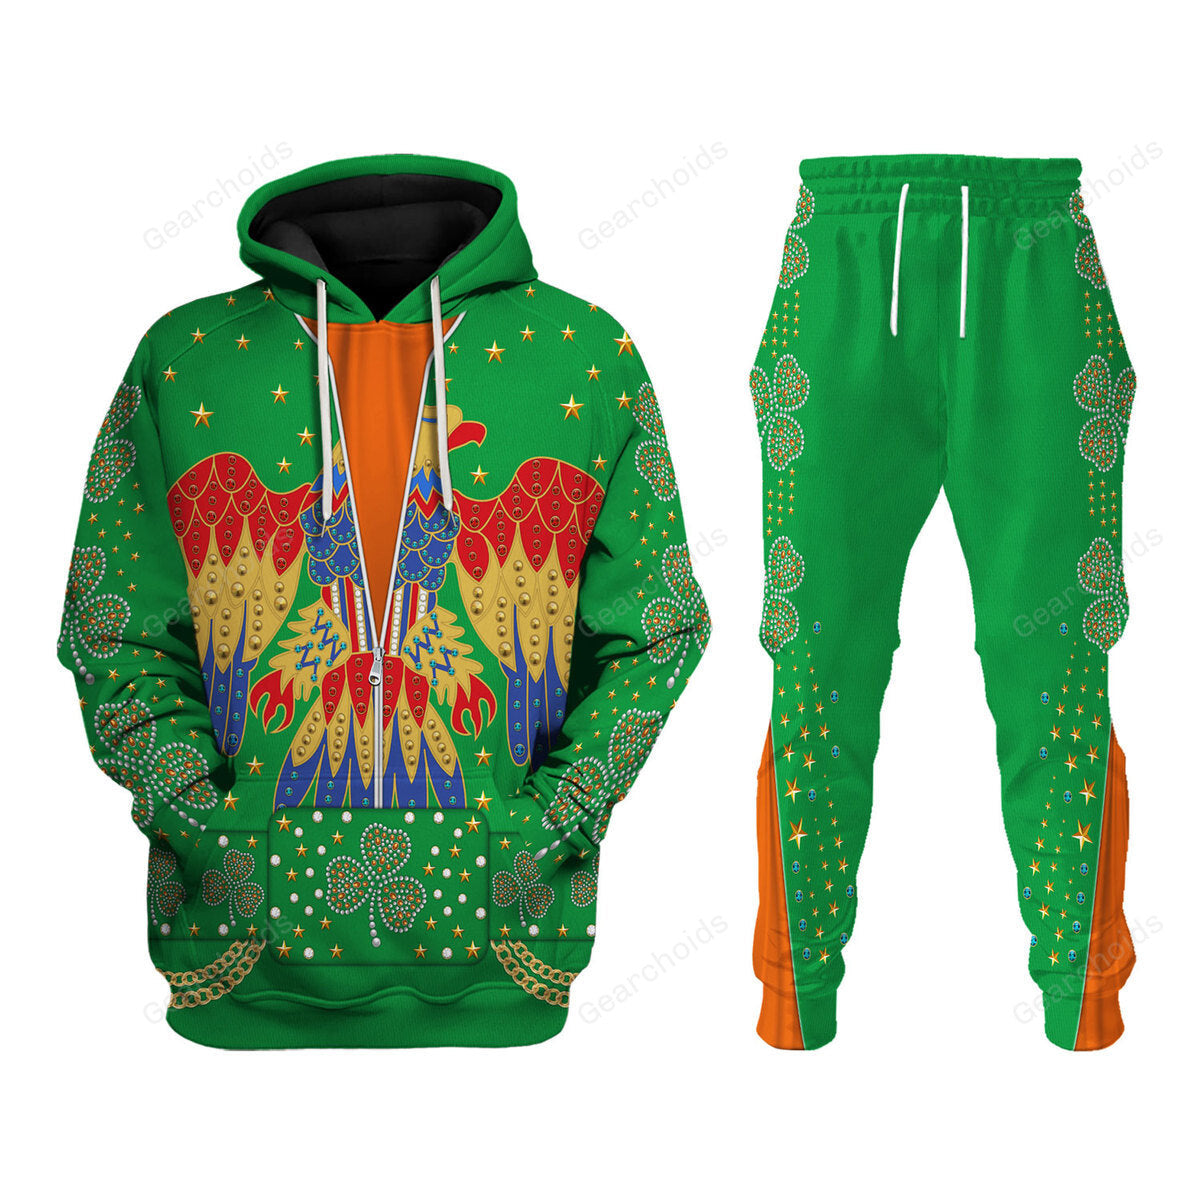 Celebrating The King Elvis Presley Costume For St. Patrick's Day - Costume Cosplay Hoodie Sweatshirt Sweatpants